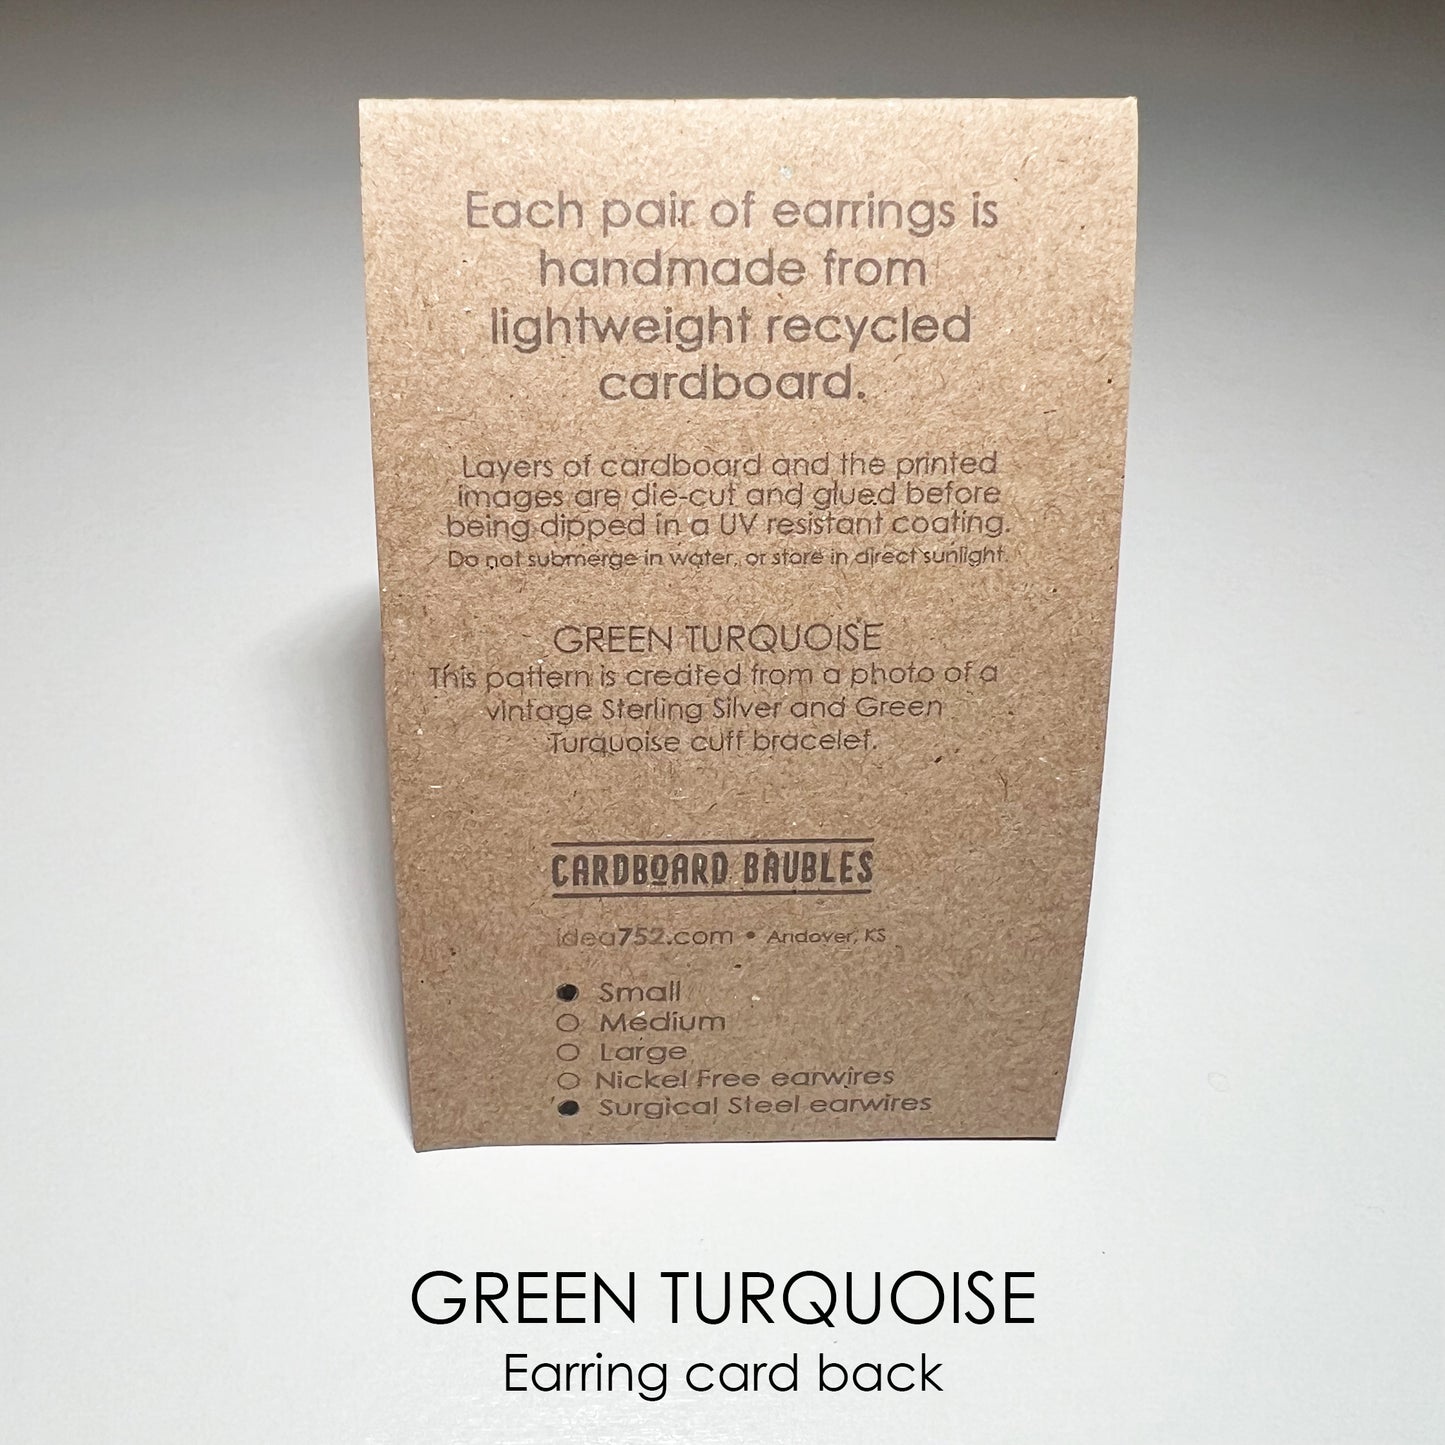 GREEN TURQUOISE - Oval Cardboard Baubles Earrings